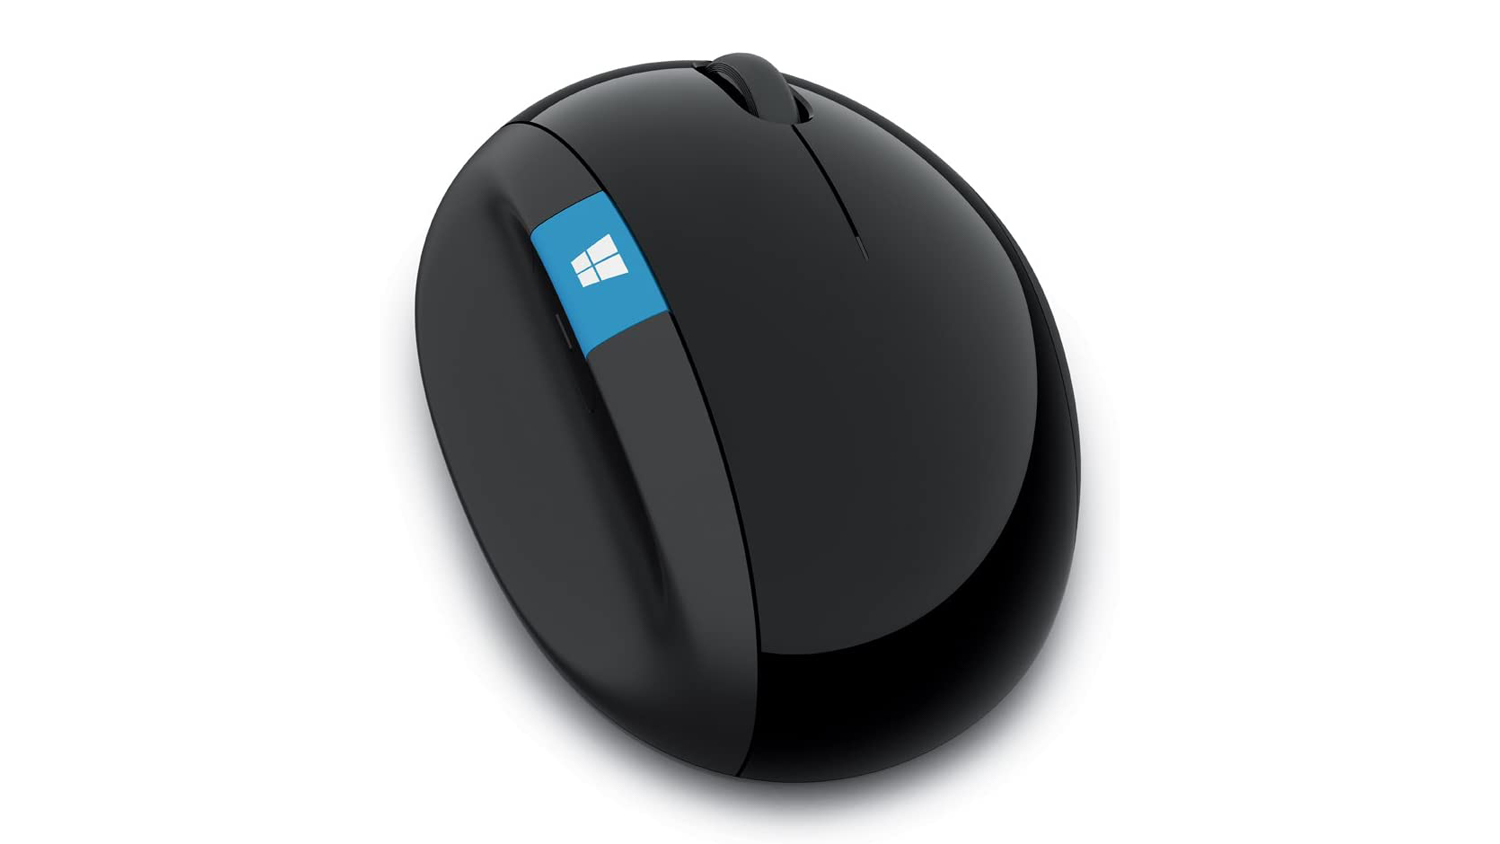 Best ergonomic mouse: Microsoft Sculpt Ergonomic